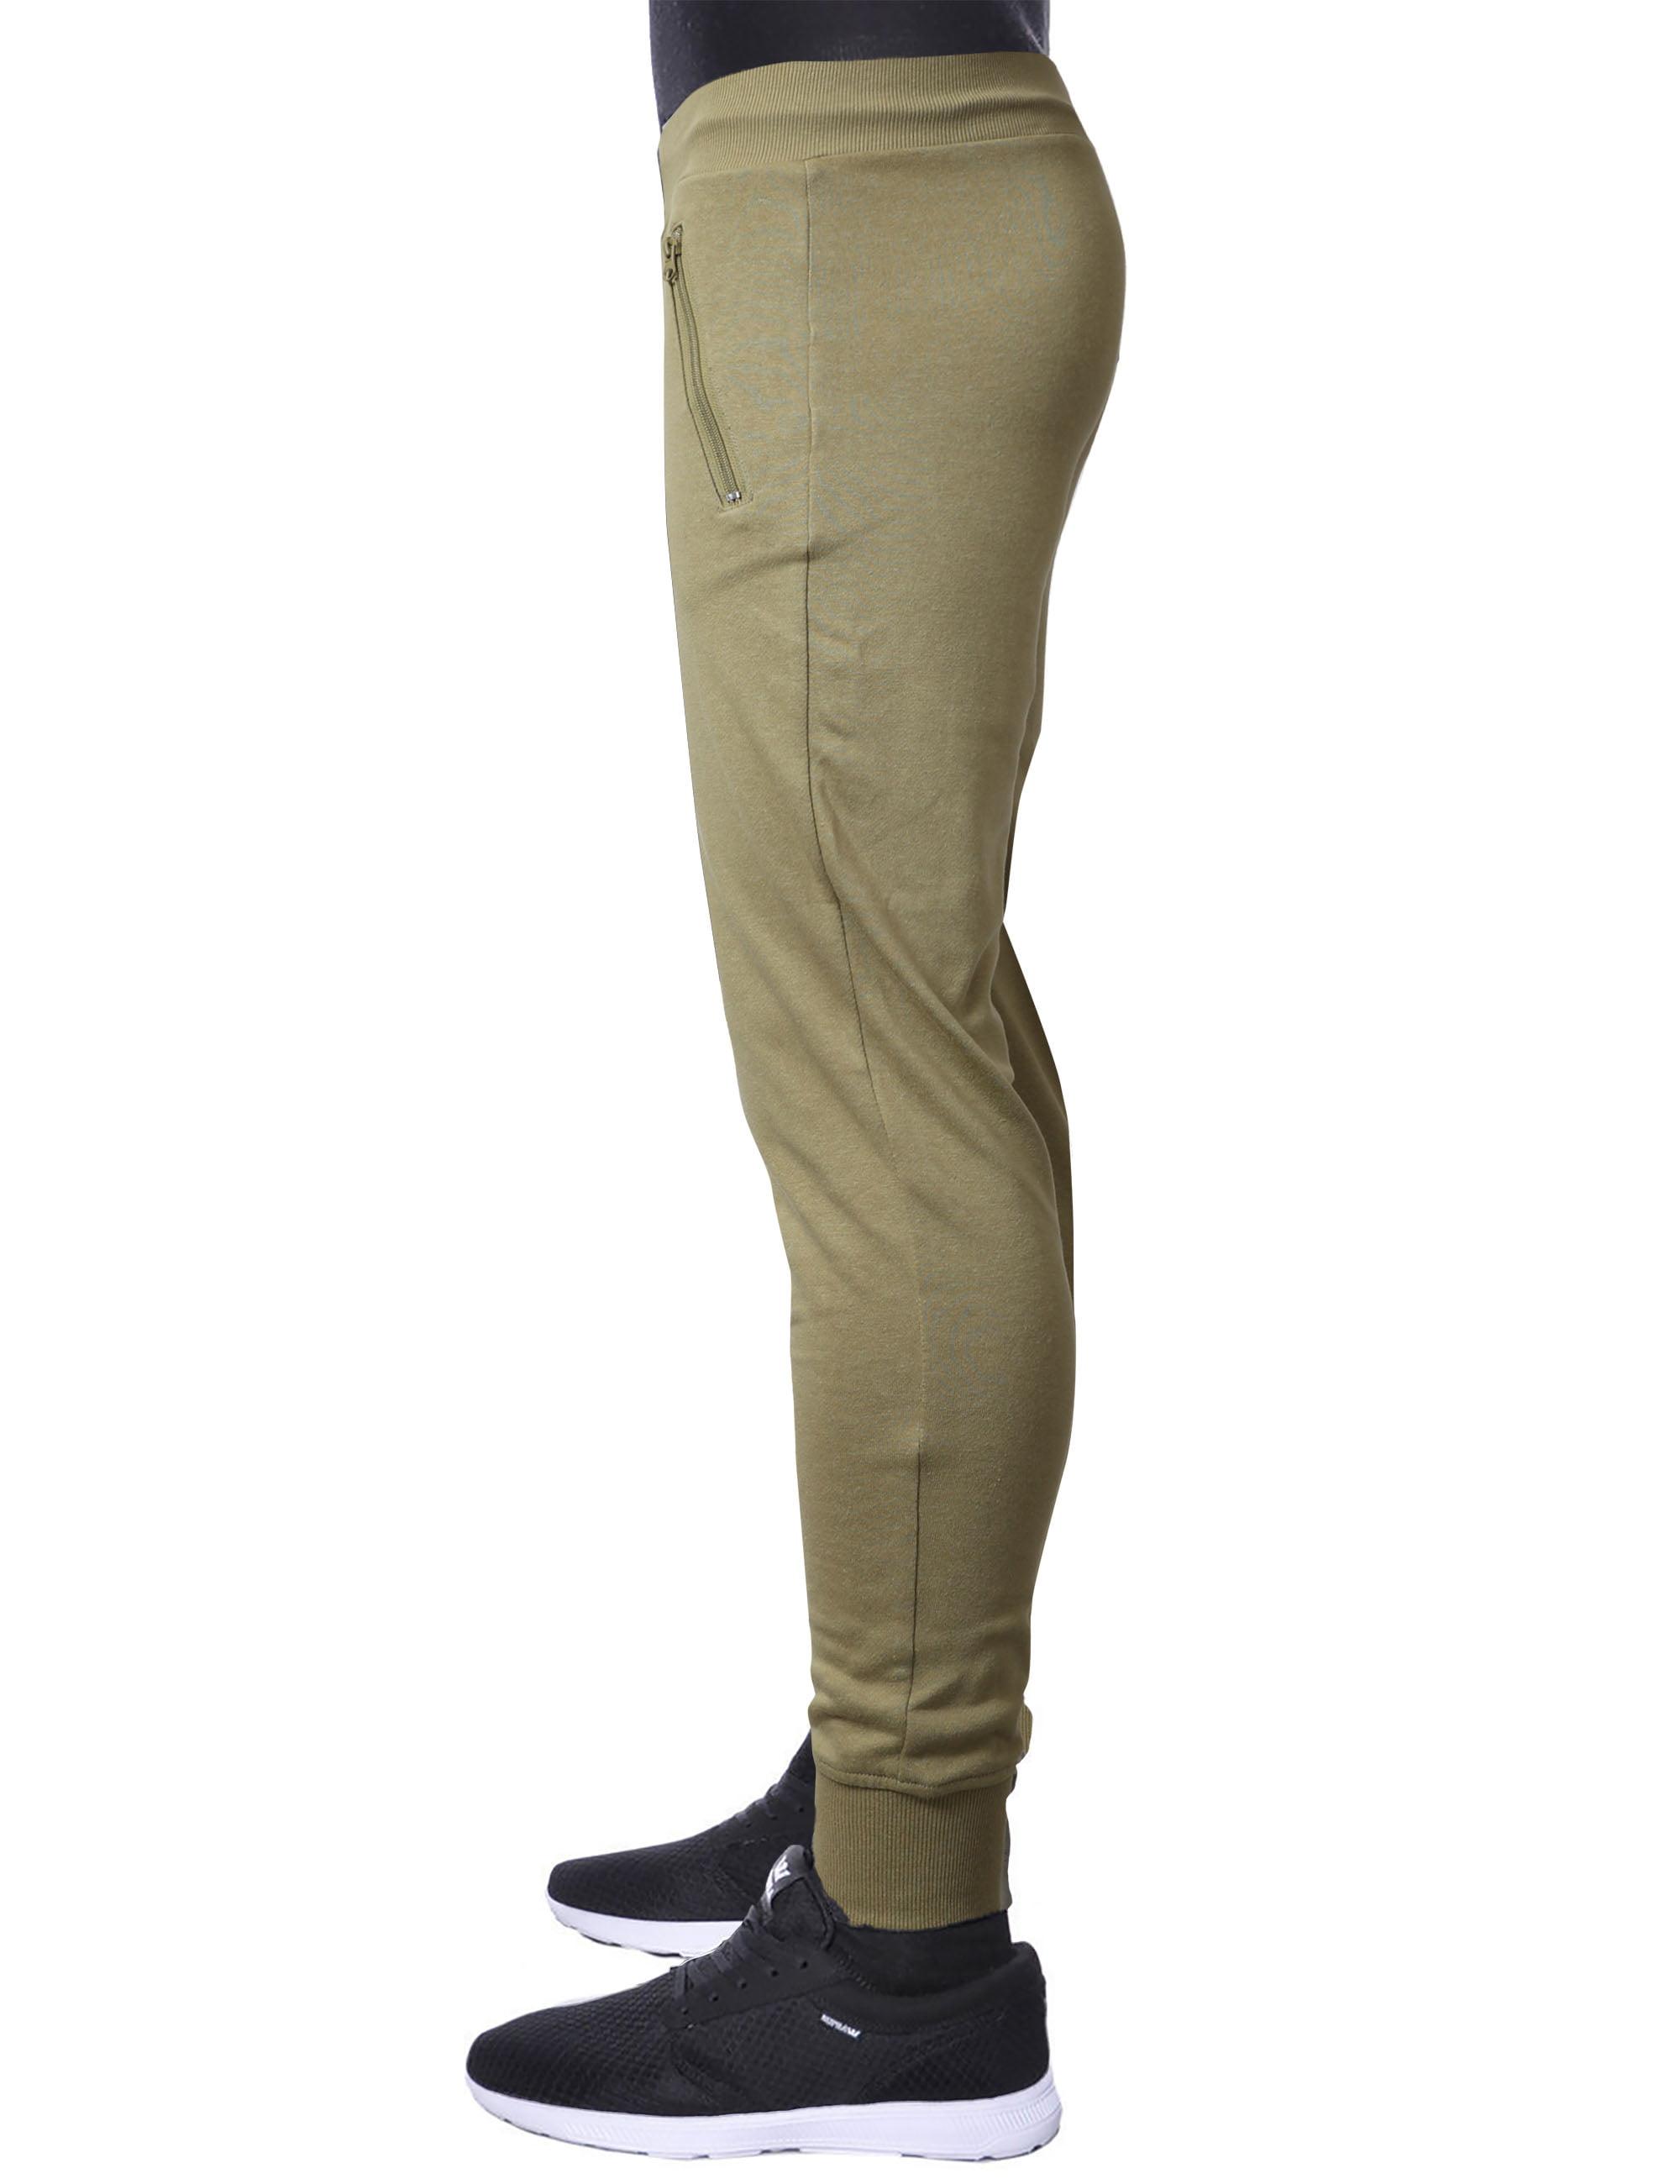 NWT $70 ETONIC Men XXL French Terry Zip Joggers Athletic Pants Sportswear 